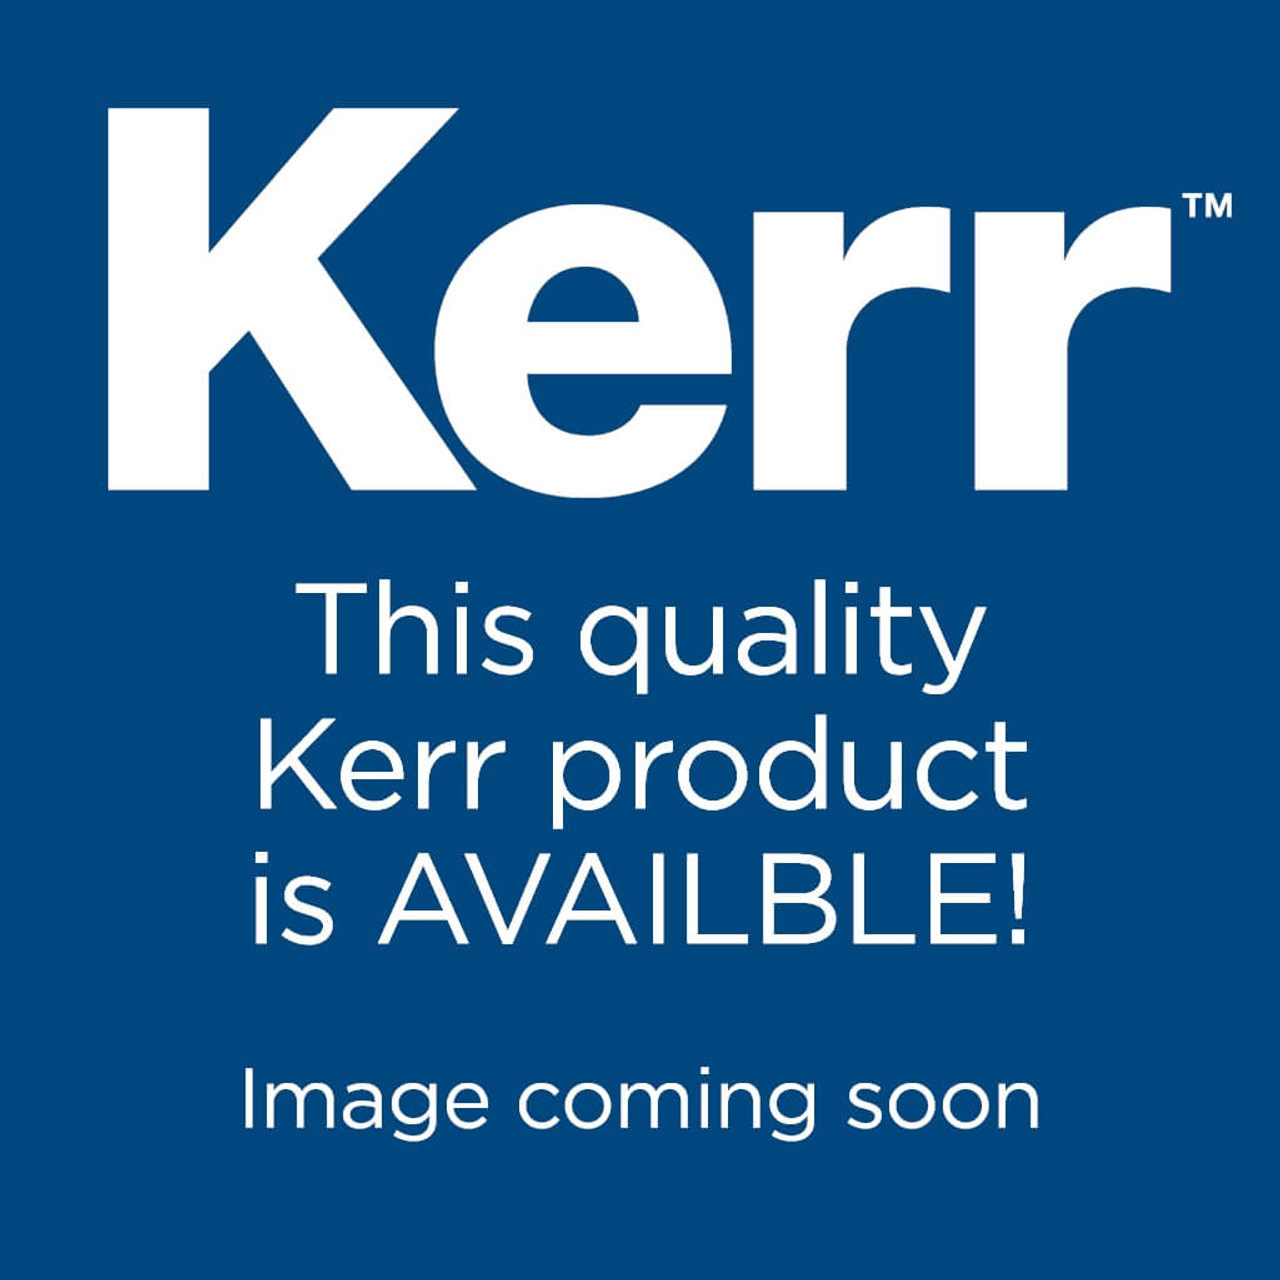 AXIS Green CeraGlaze - FG, P353-3, Kerr Dental